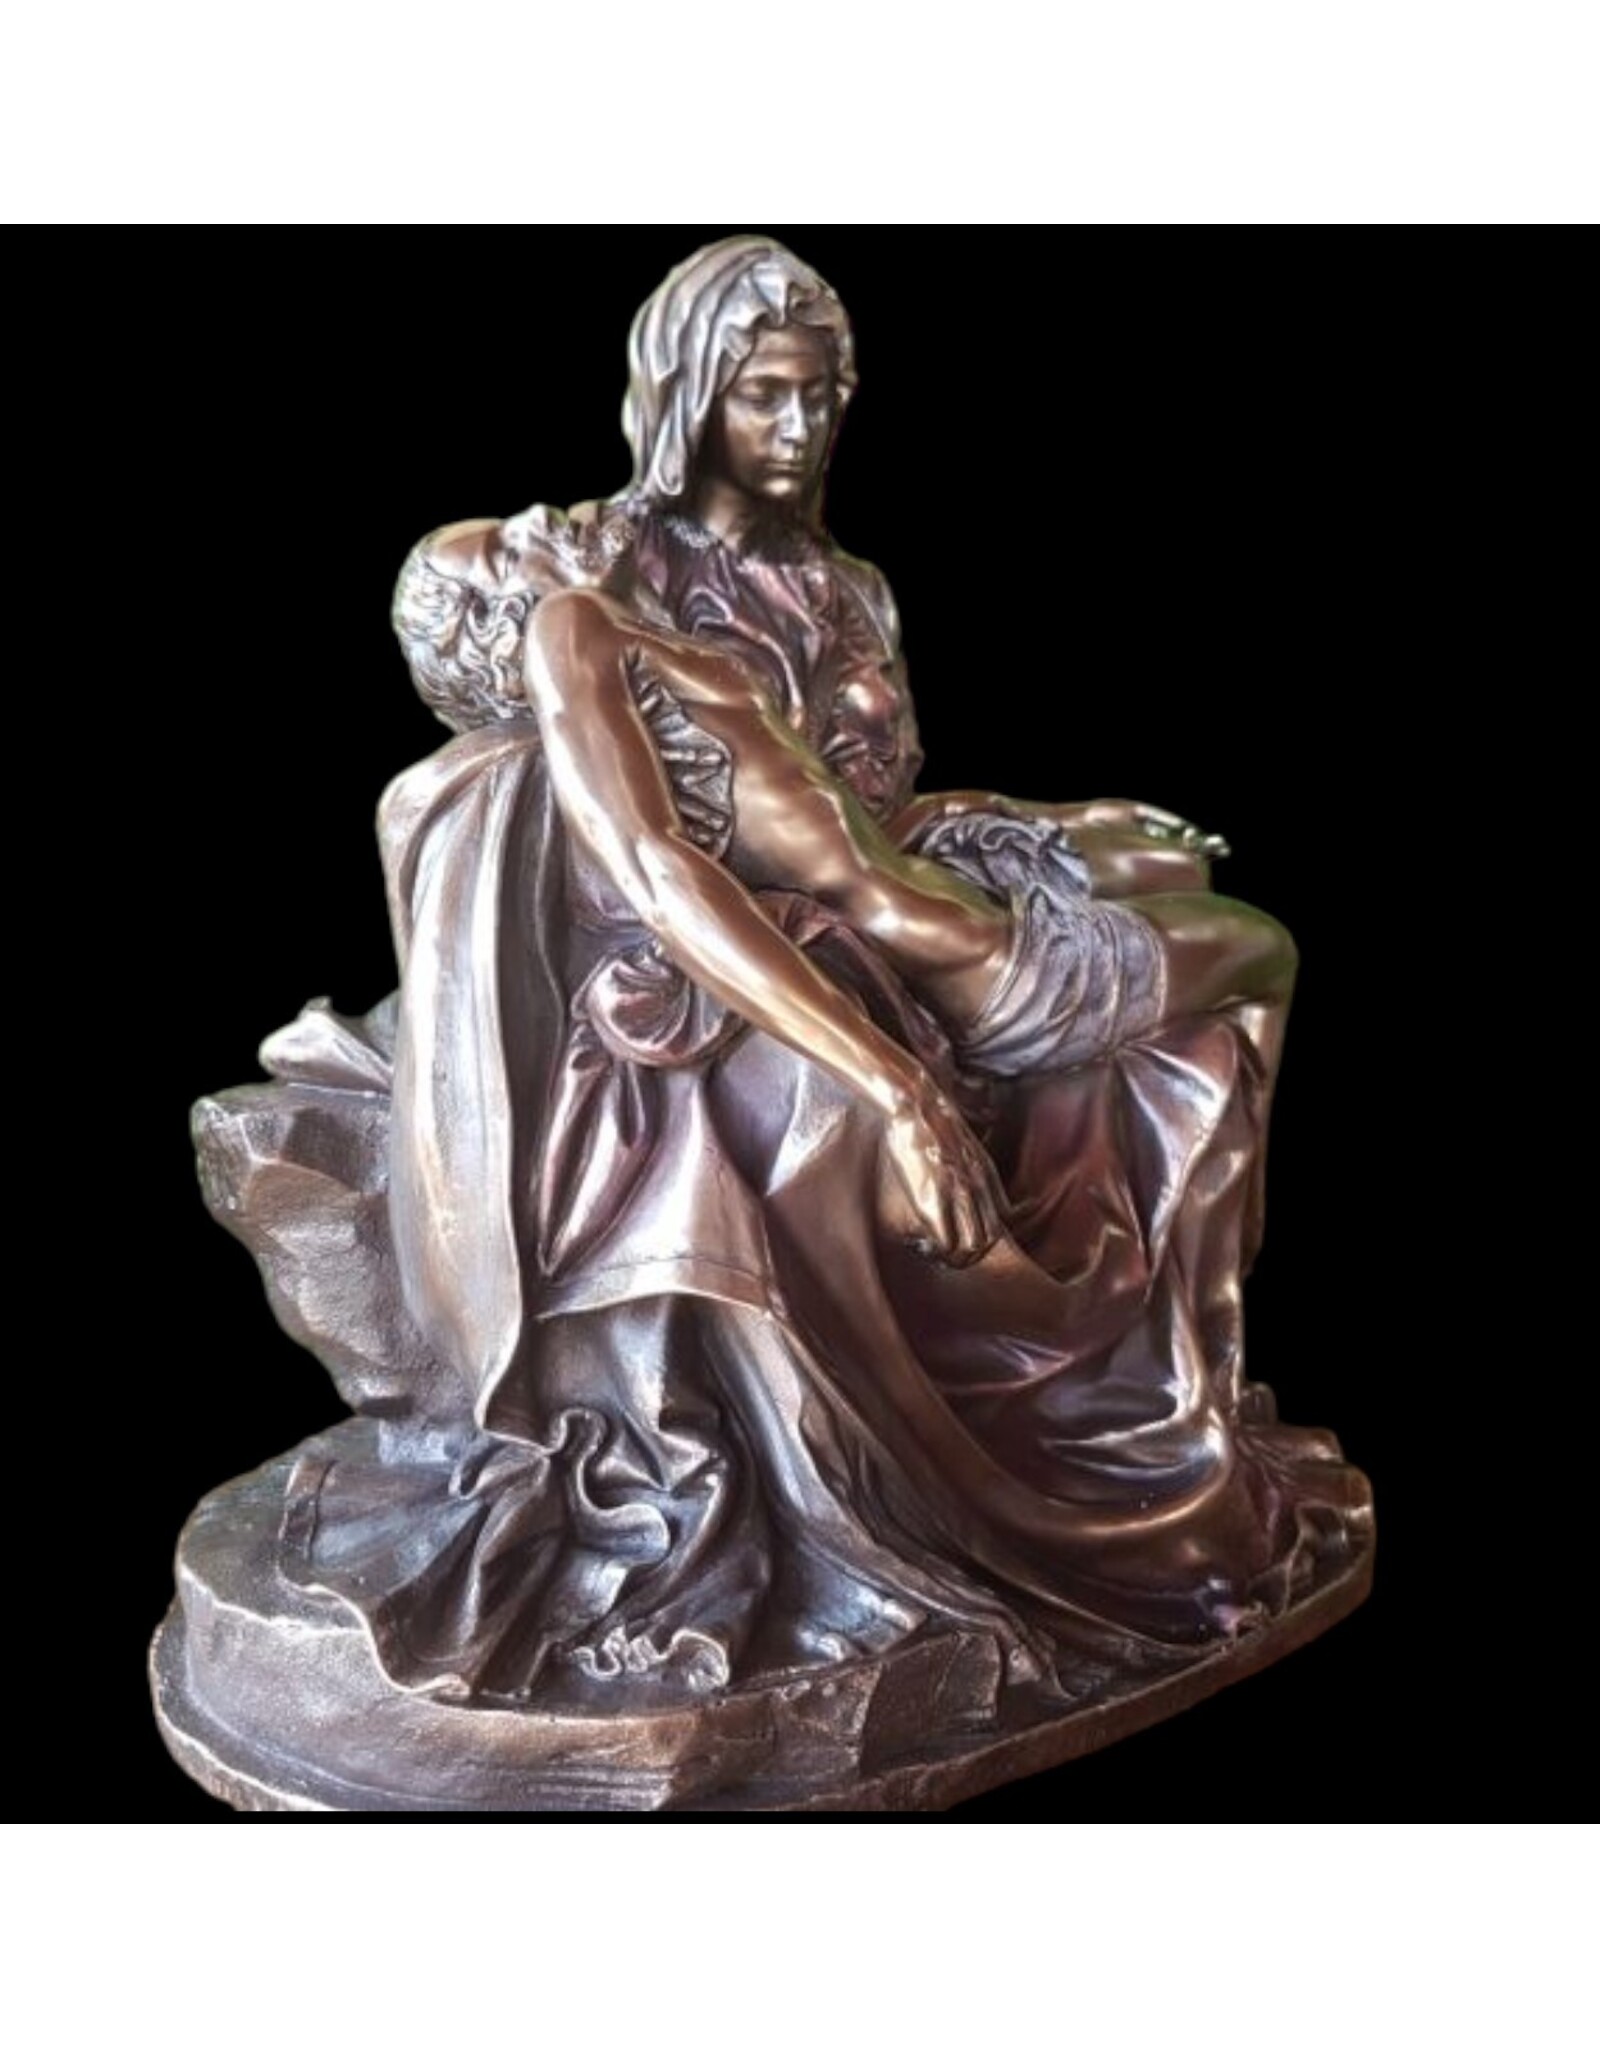 Veronese Design Giftware & Lifestyle - Pieta Michelangelo Christus removed from the cross Veronese Design